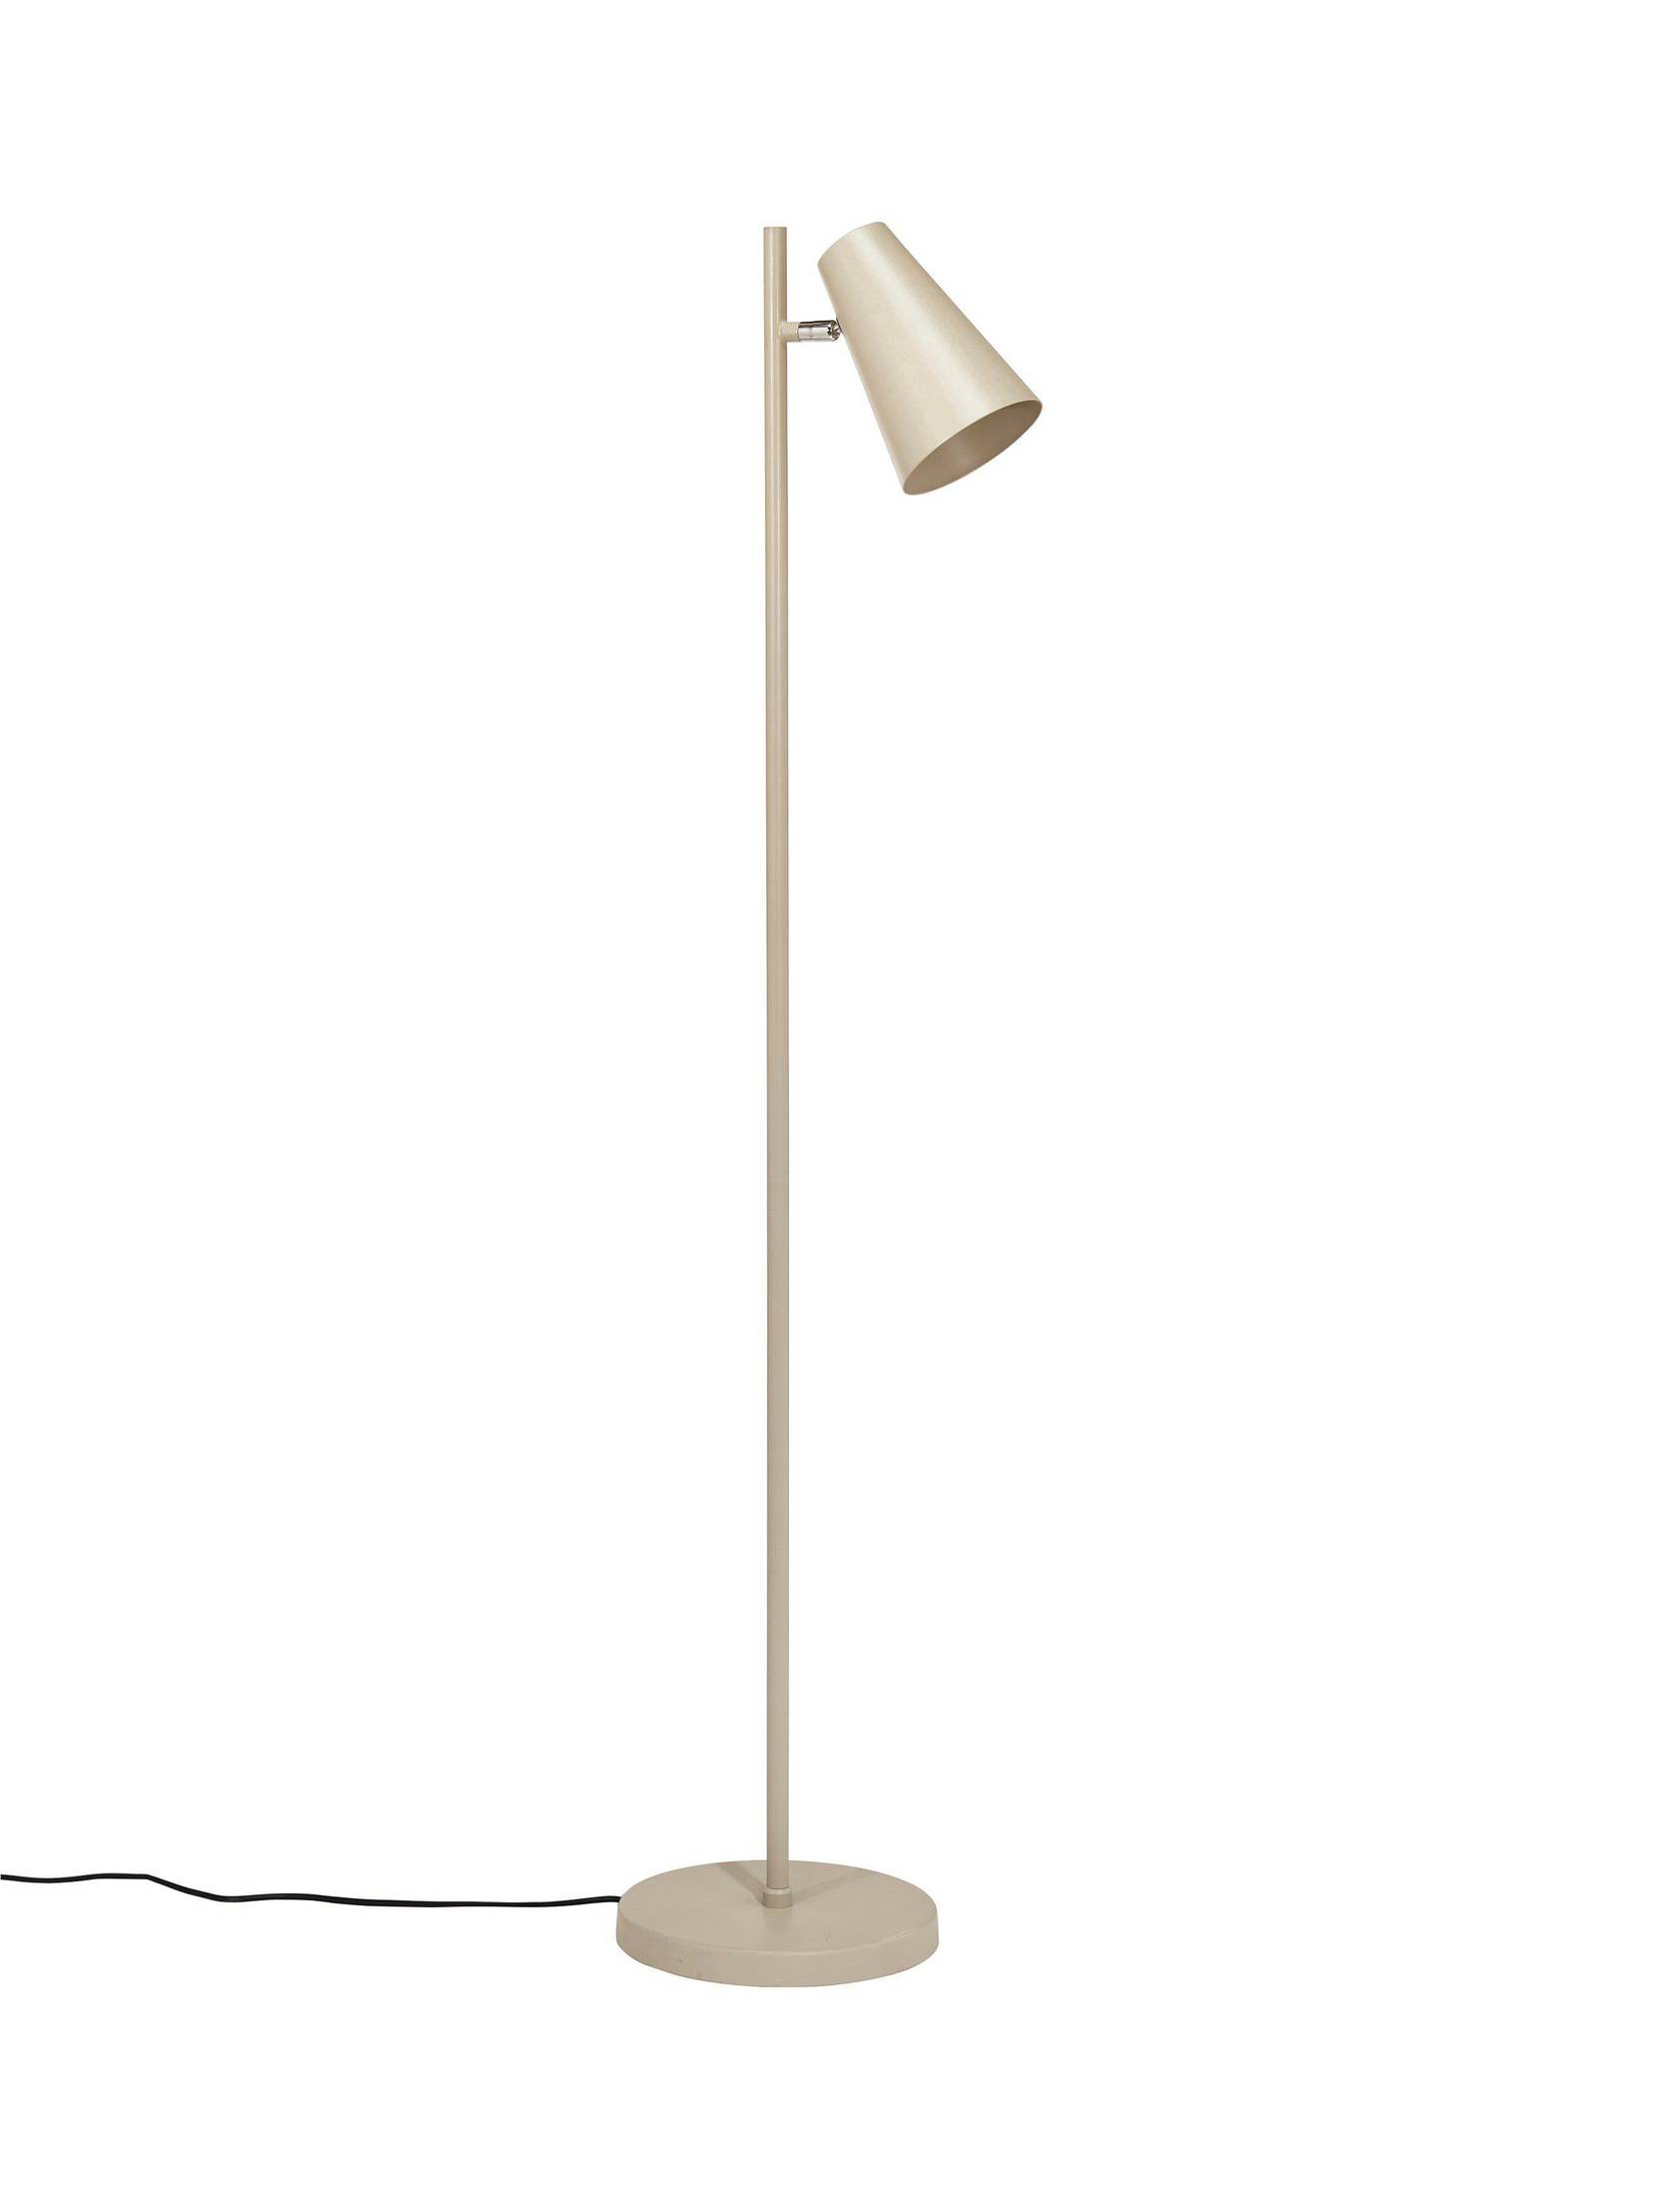 PR Home - Golvlampa Cornet 1arm 145 cm - Beige